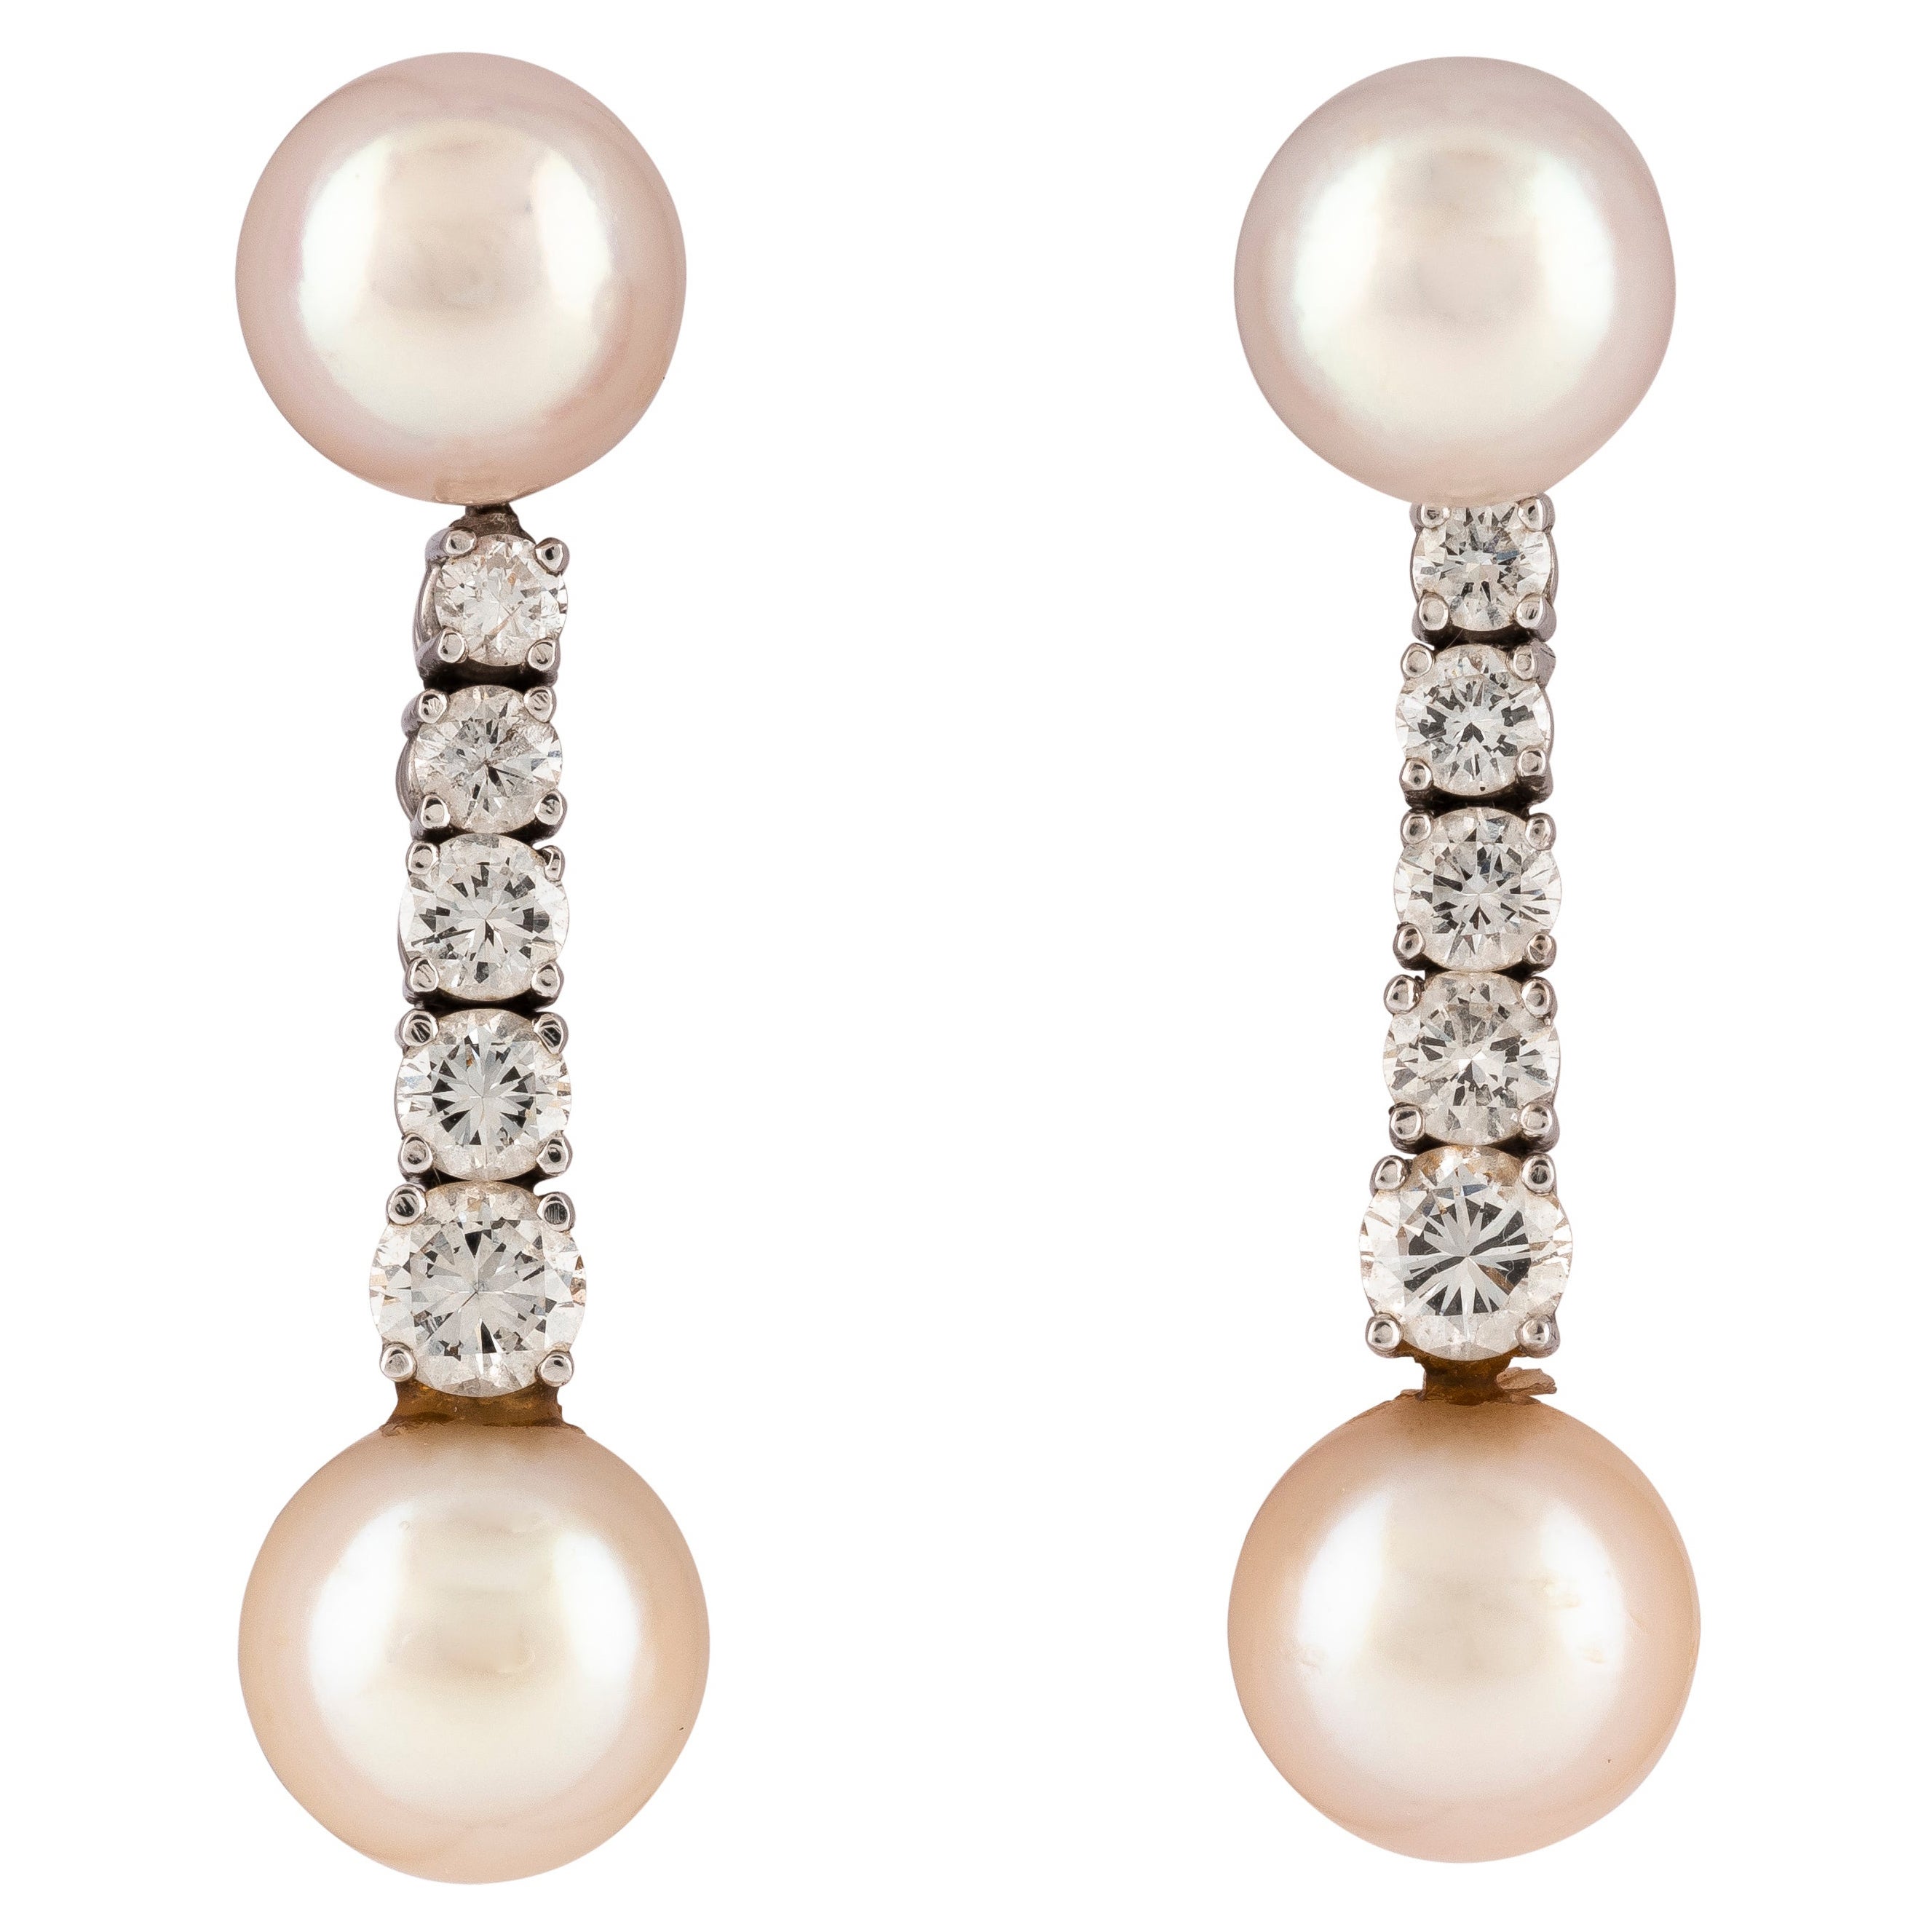 Pair of Pearl Earrings with Diamond